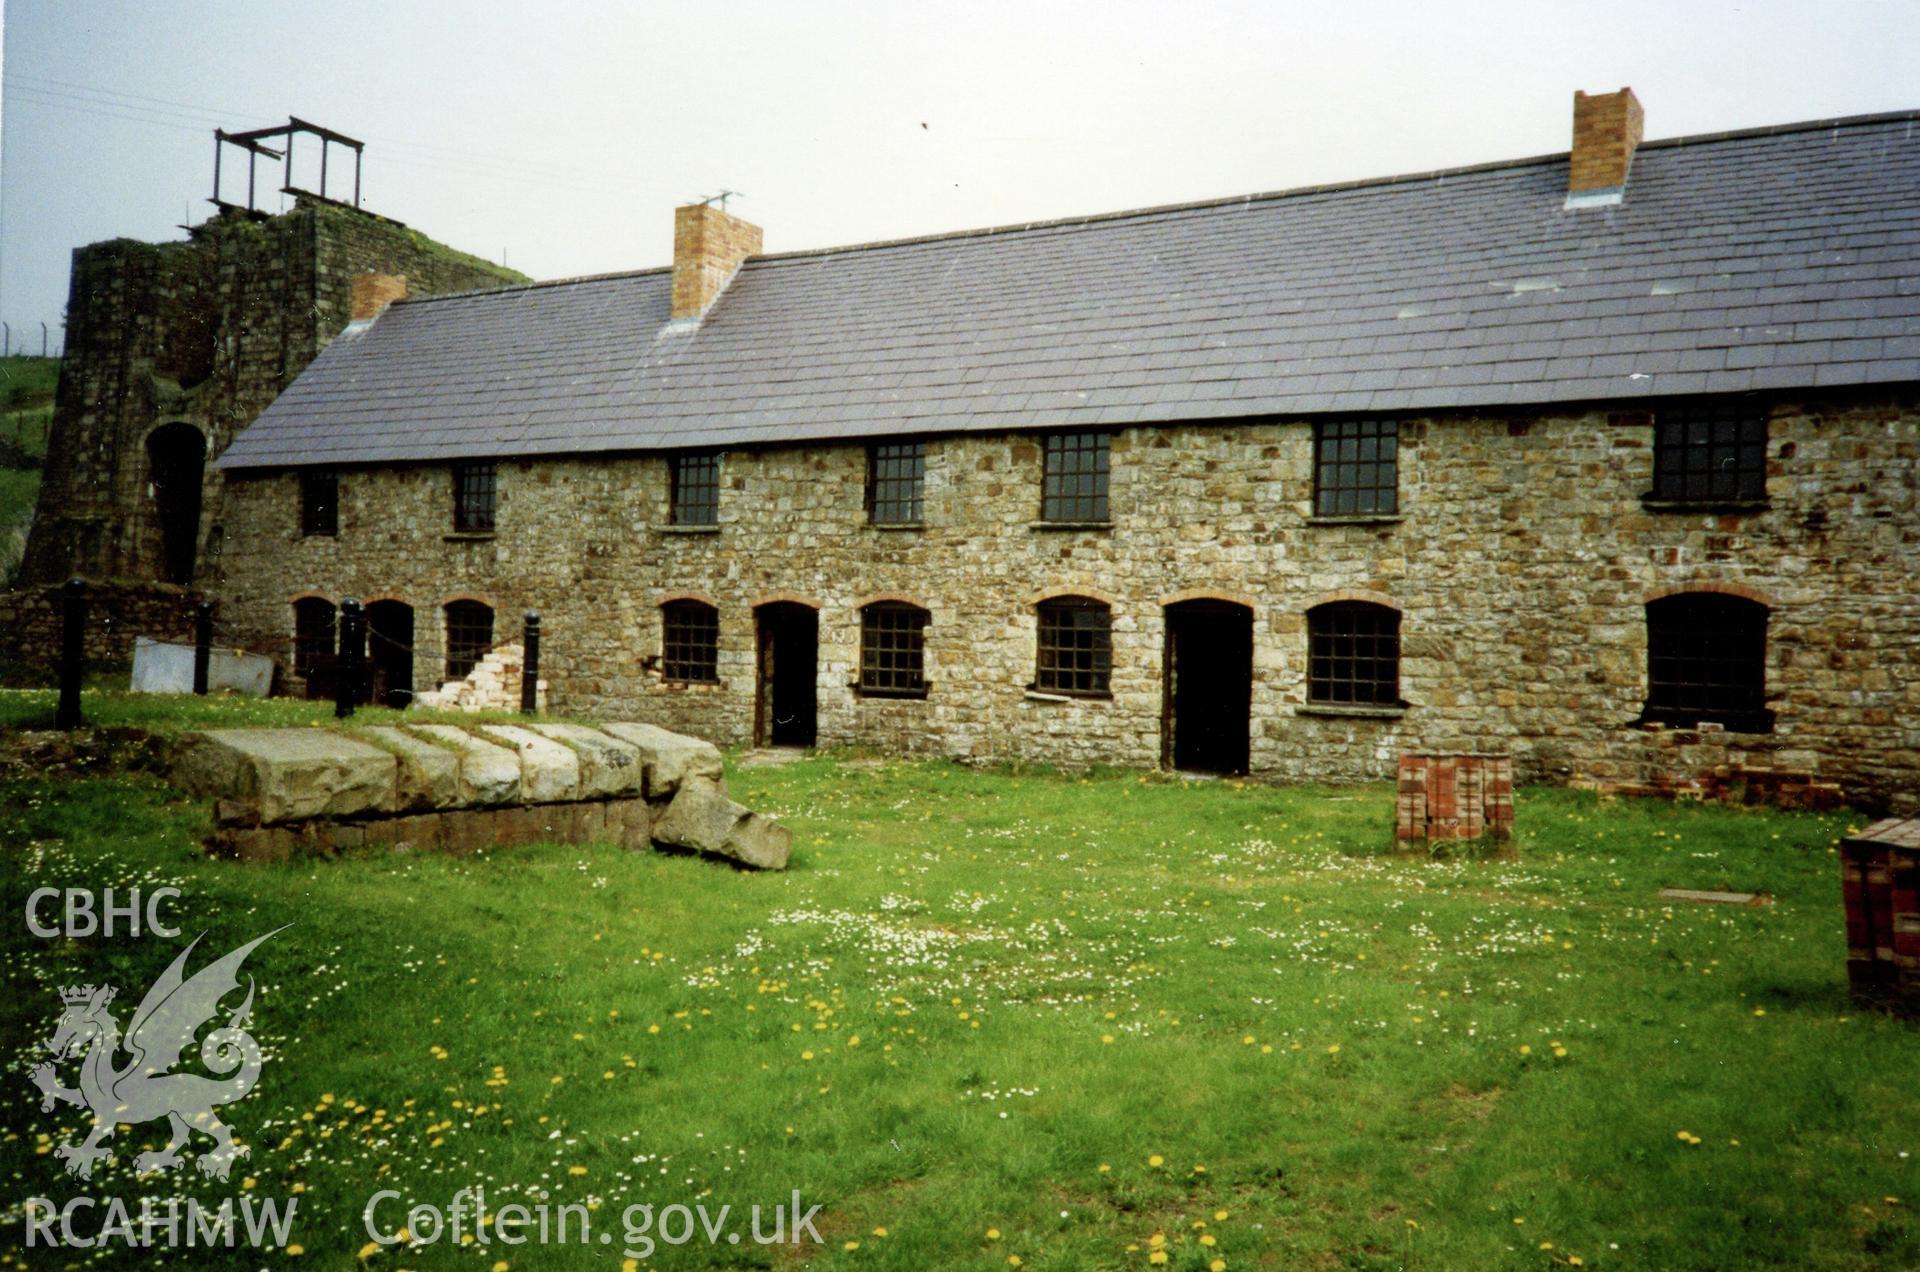 Digital photograph showing Blaenavon Ironworks, taken in 1993